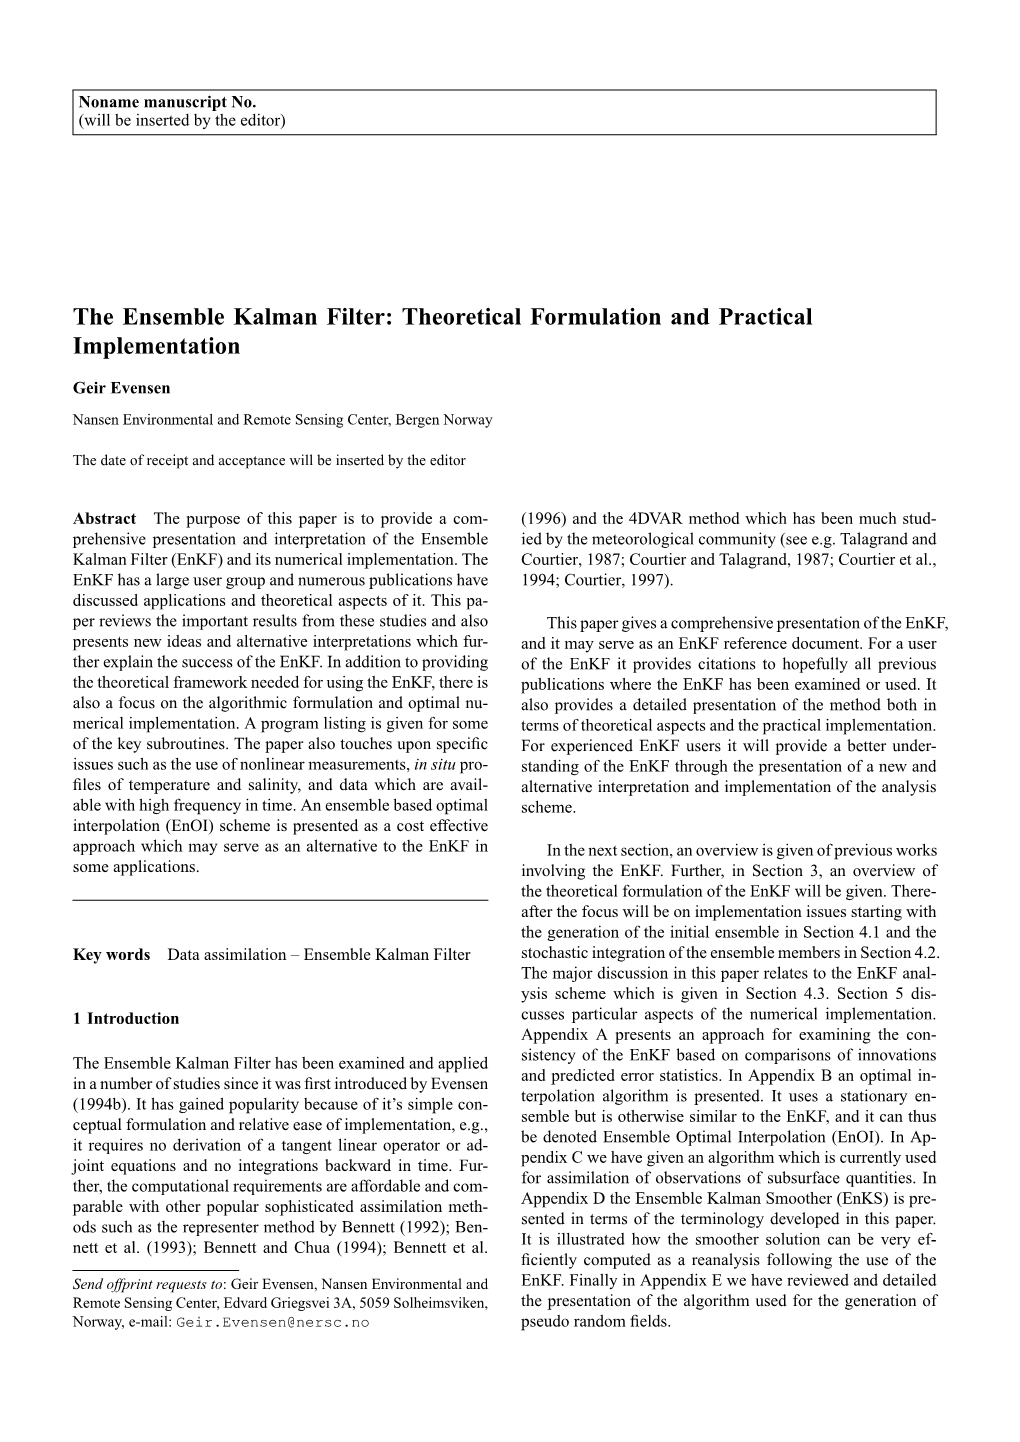 The Ensemble Kalman Filter: Theoretical Formulation and Practical Implementation